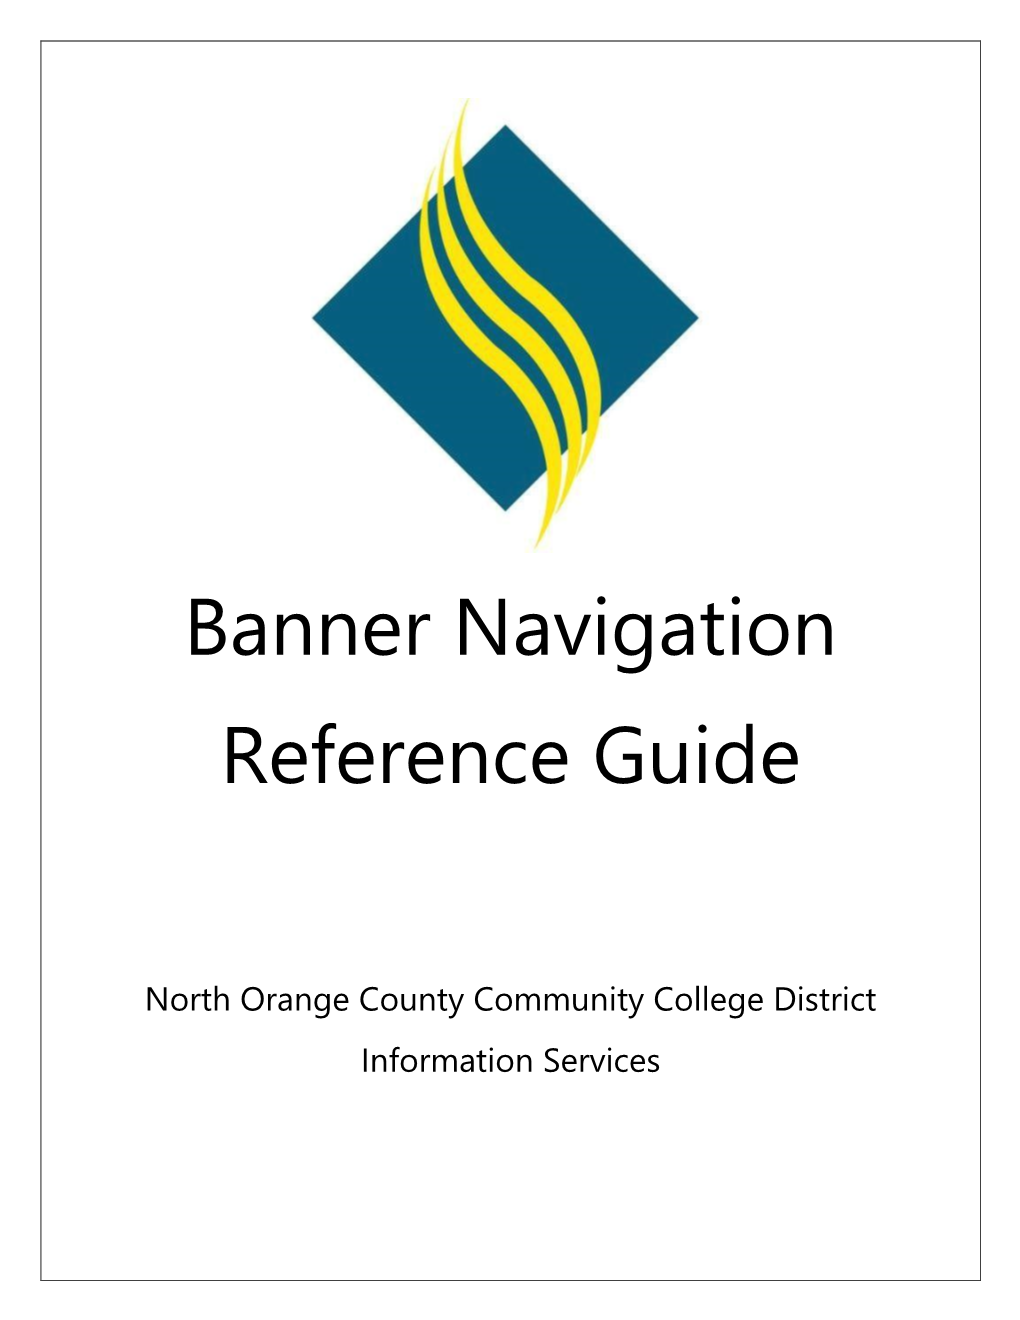 Banner Navigation Reference Guide